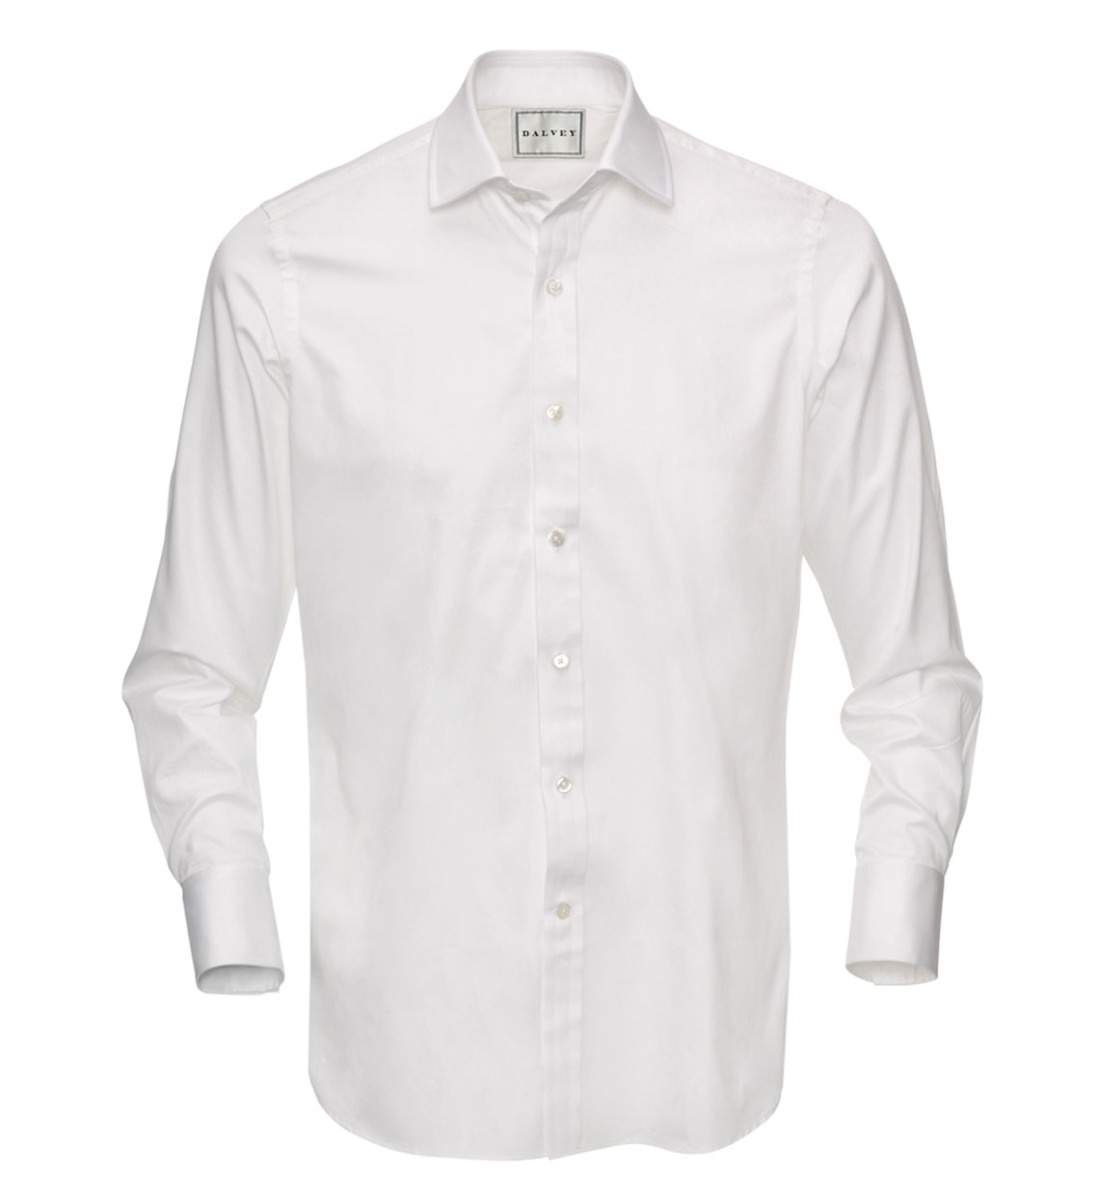 Shirt Button Cuff Solid White Poplin - Dalvey